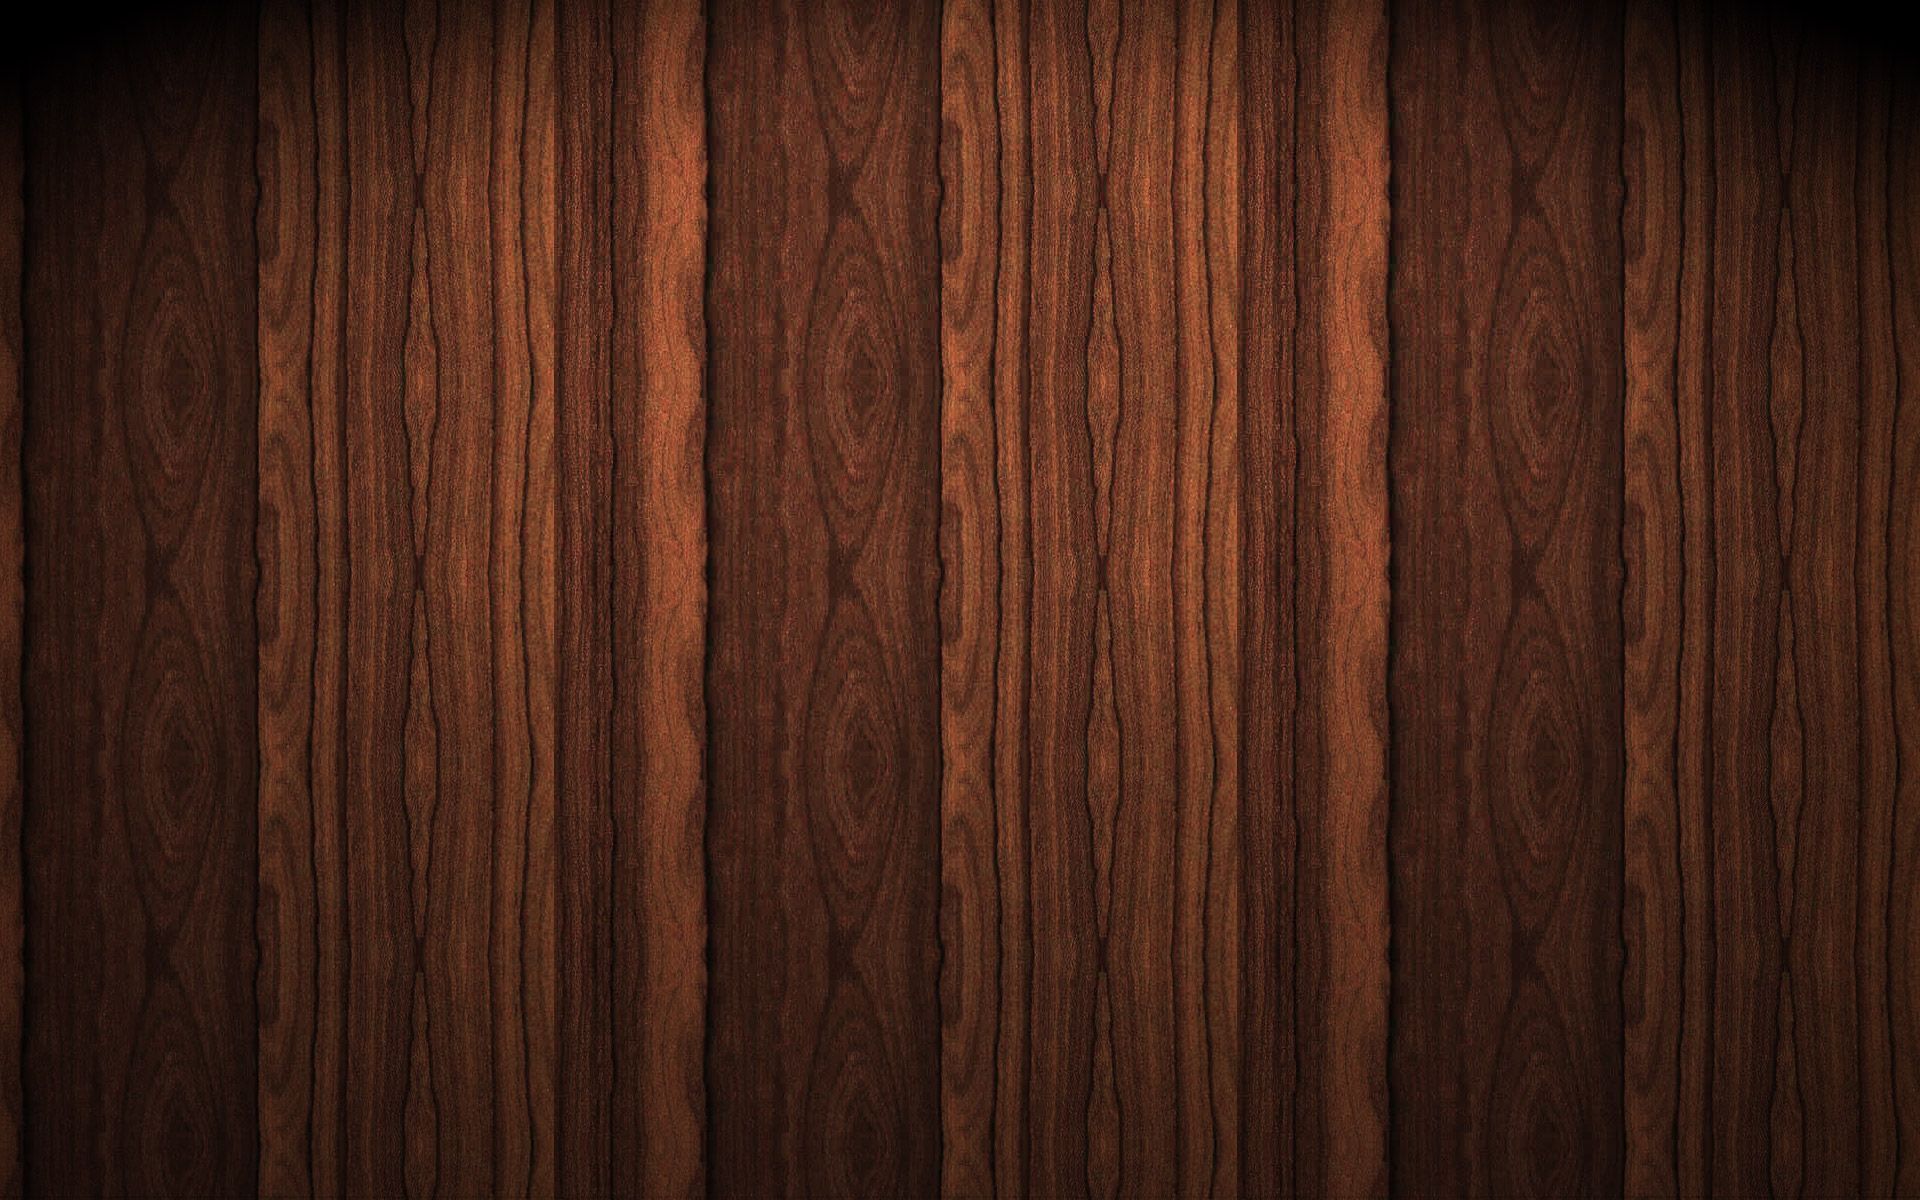 Wood texture abstract hd wallpaper 1920x1200 5488 Hawks Rest